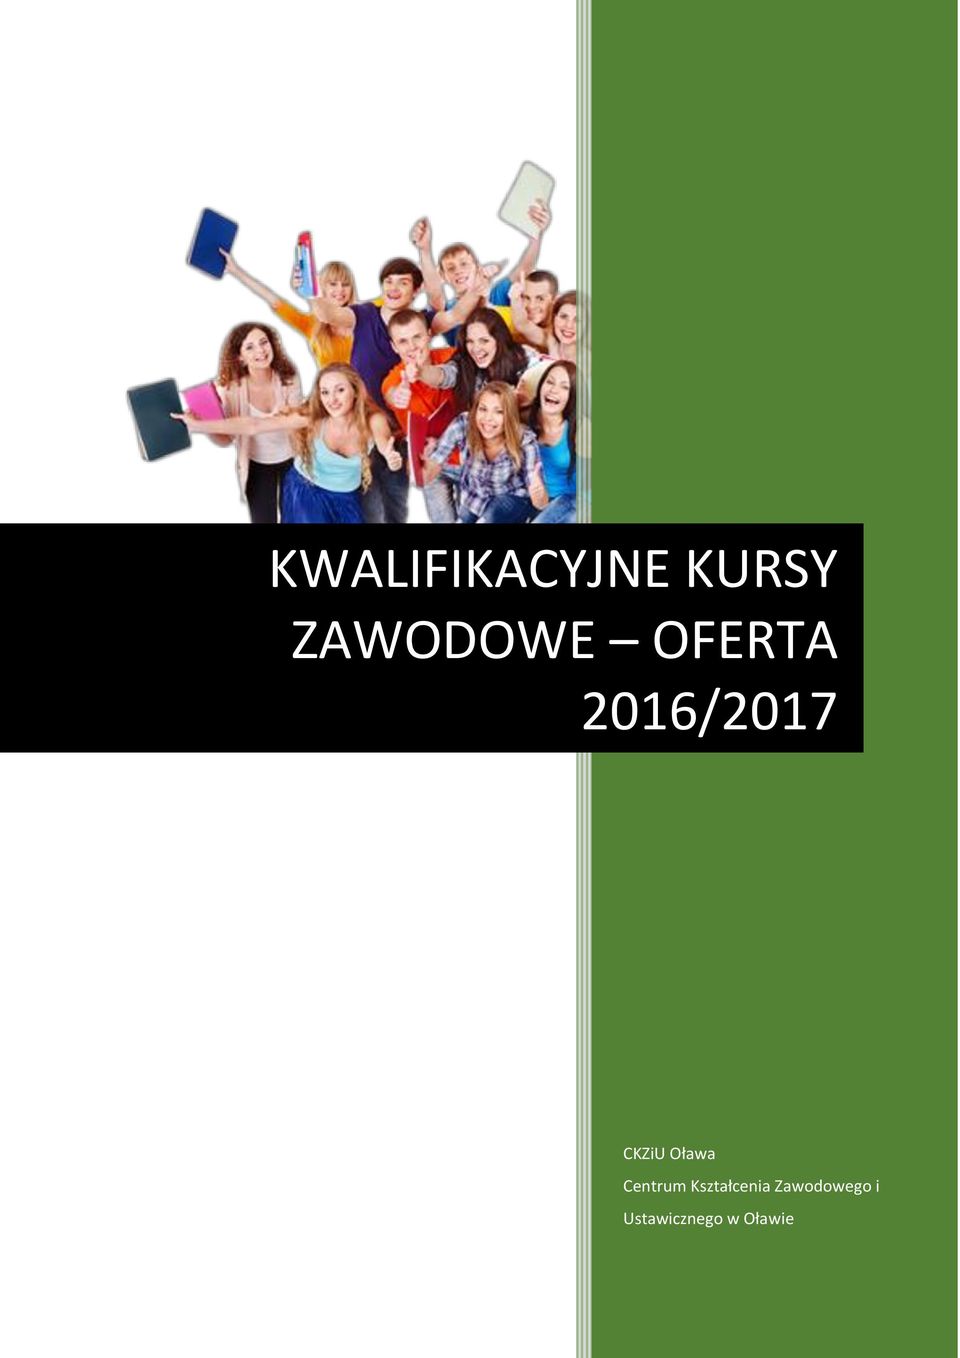 CKZiU Oława Centrum